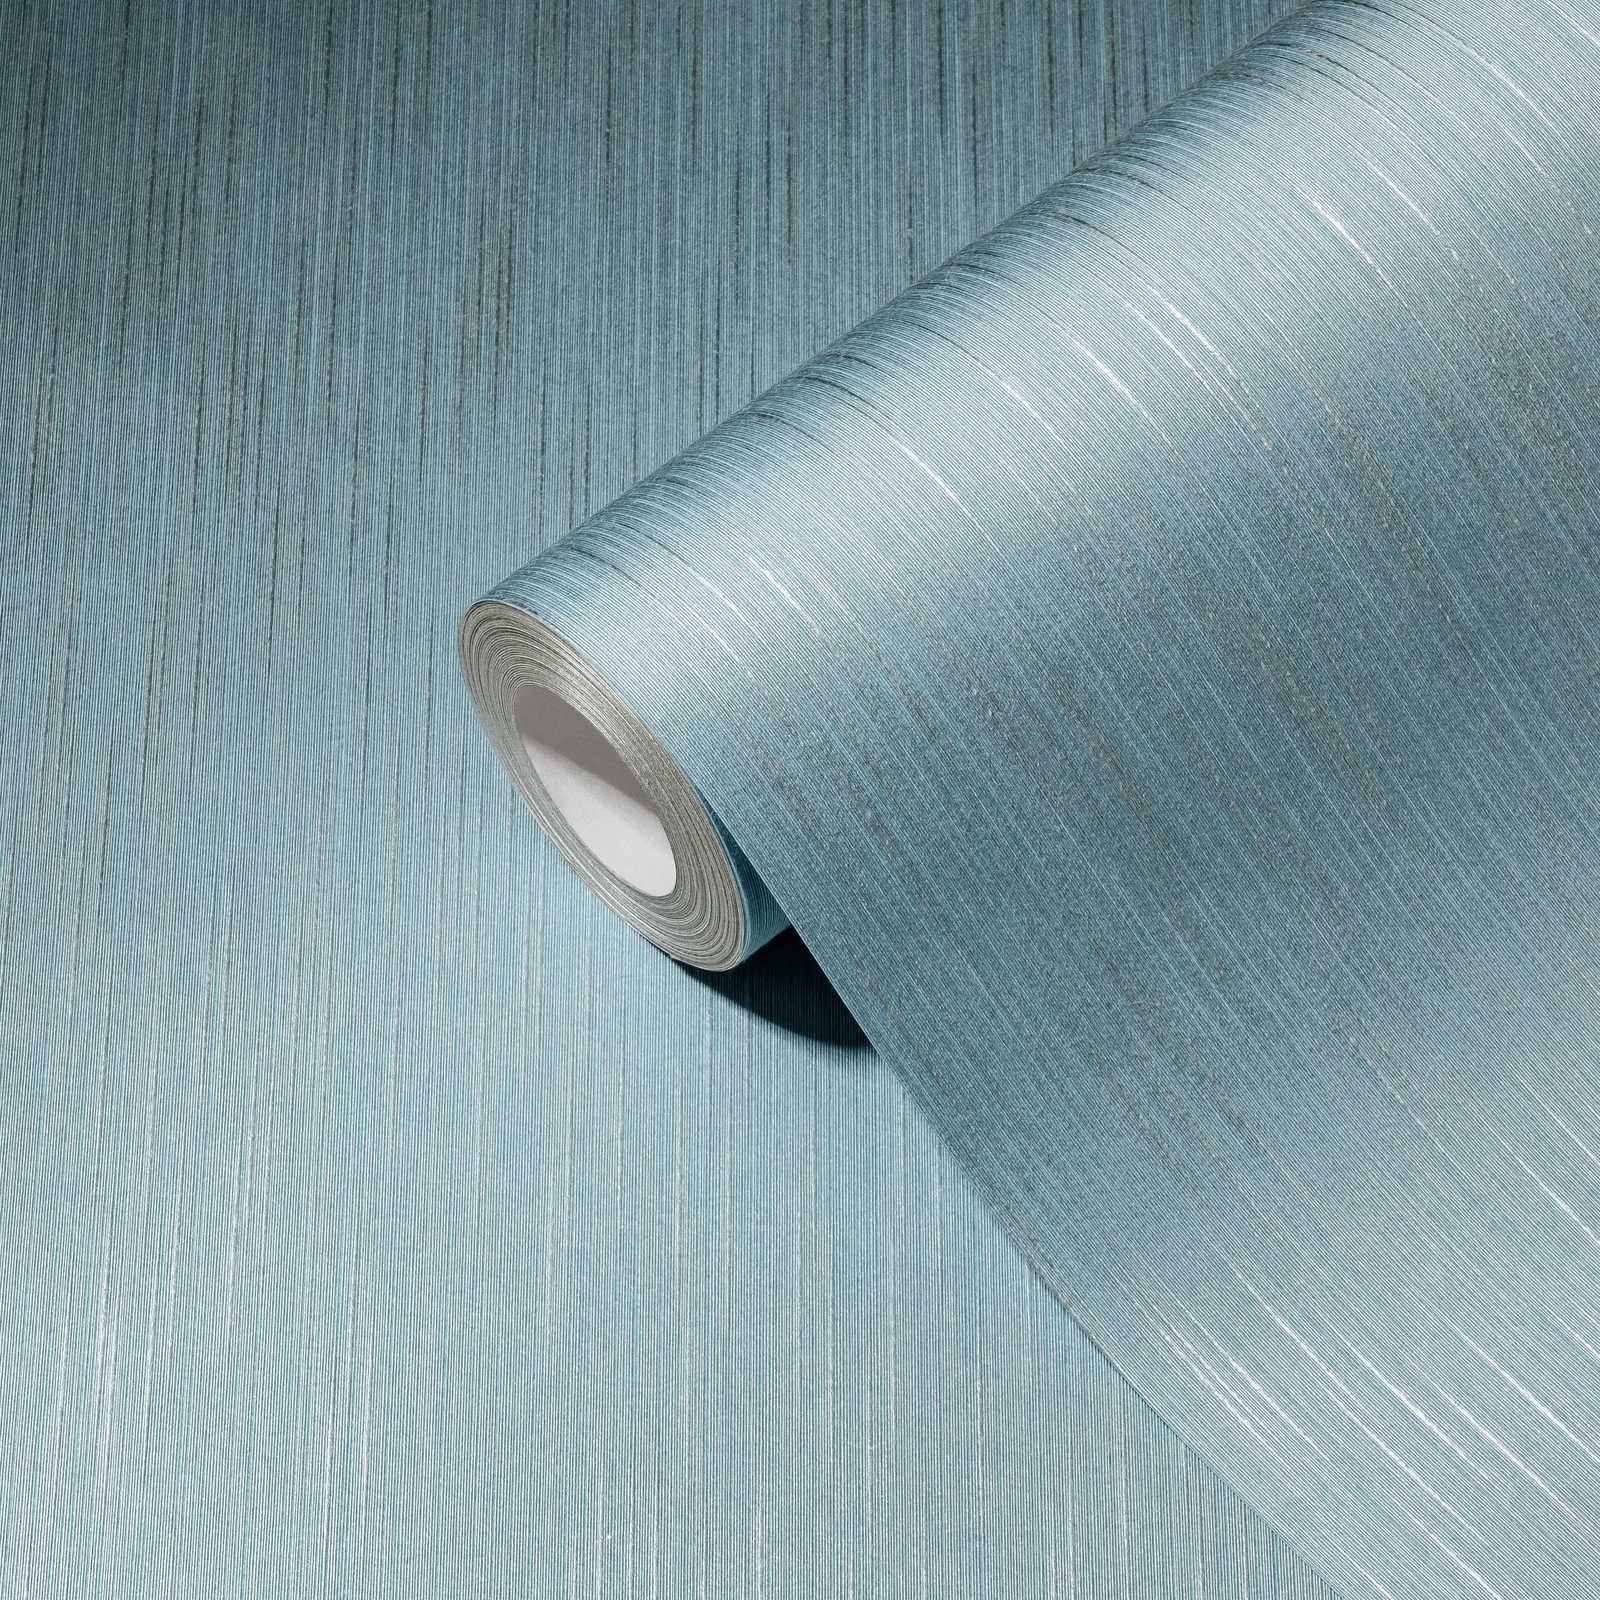             Tapete Blau Grau mit Struktureffekt & melierter Farbe & Textileffekt
        